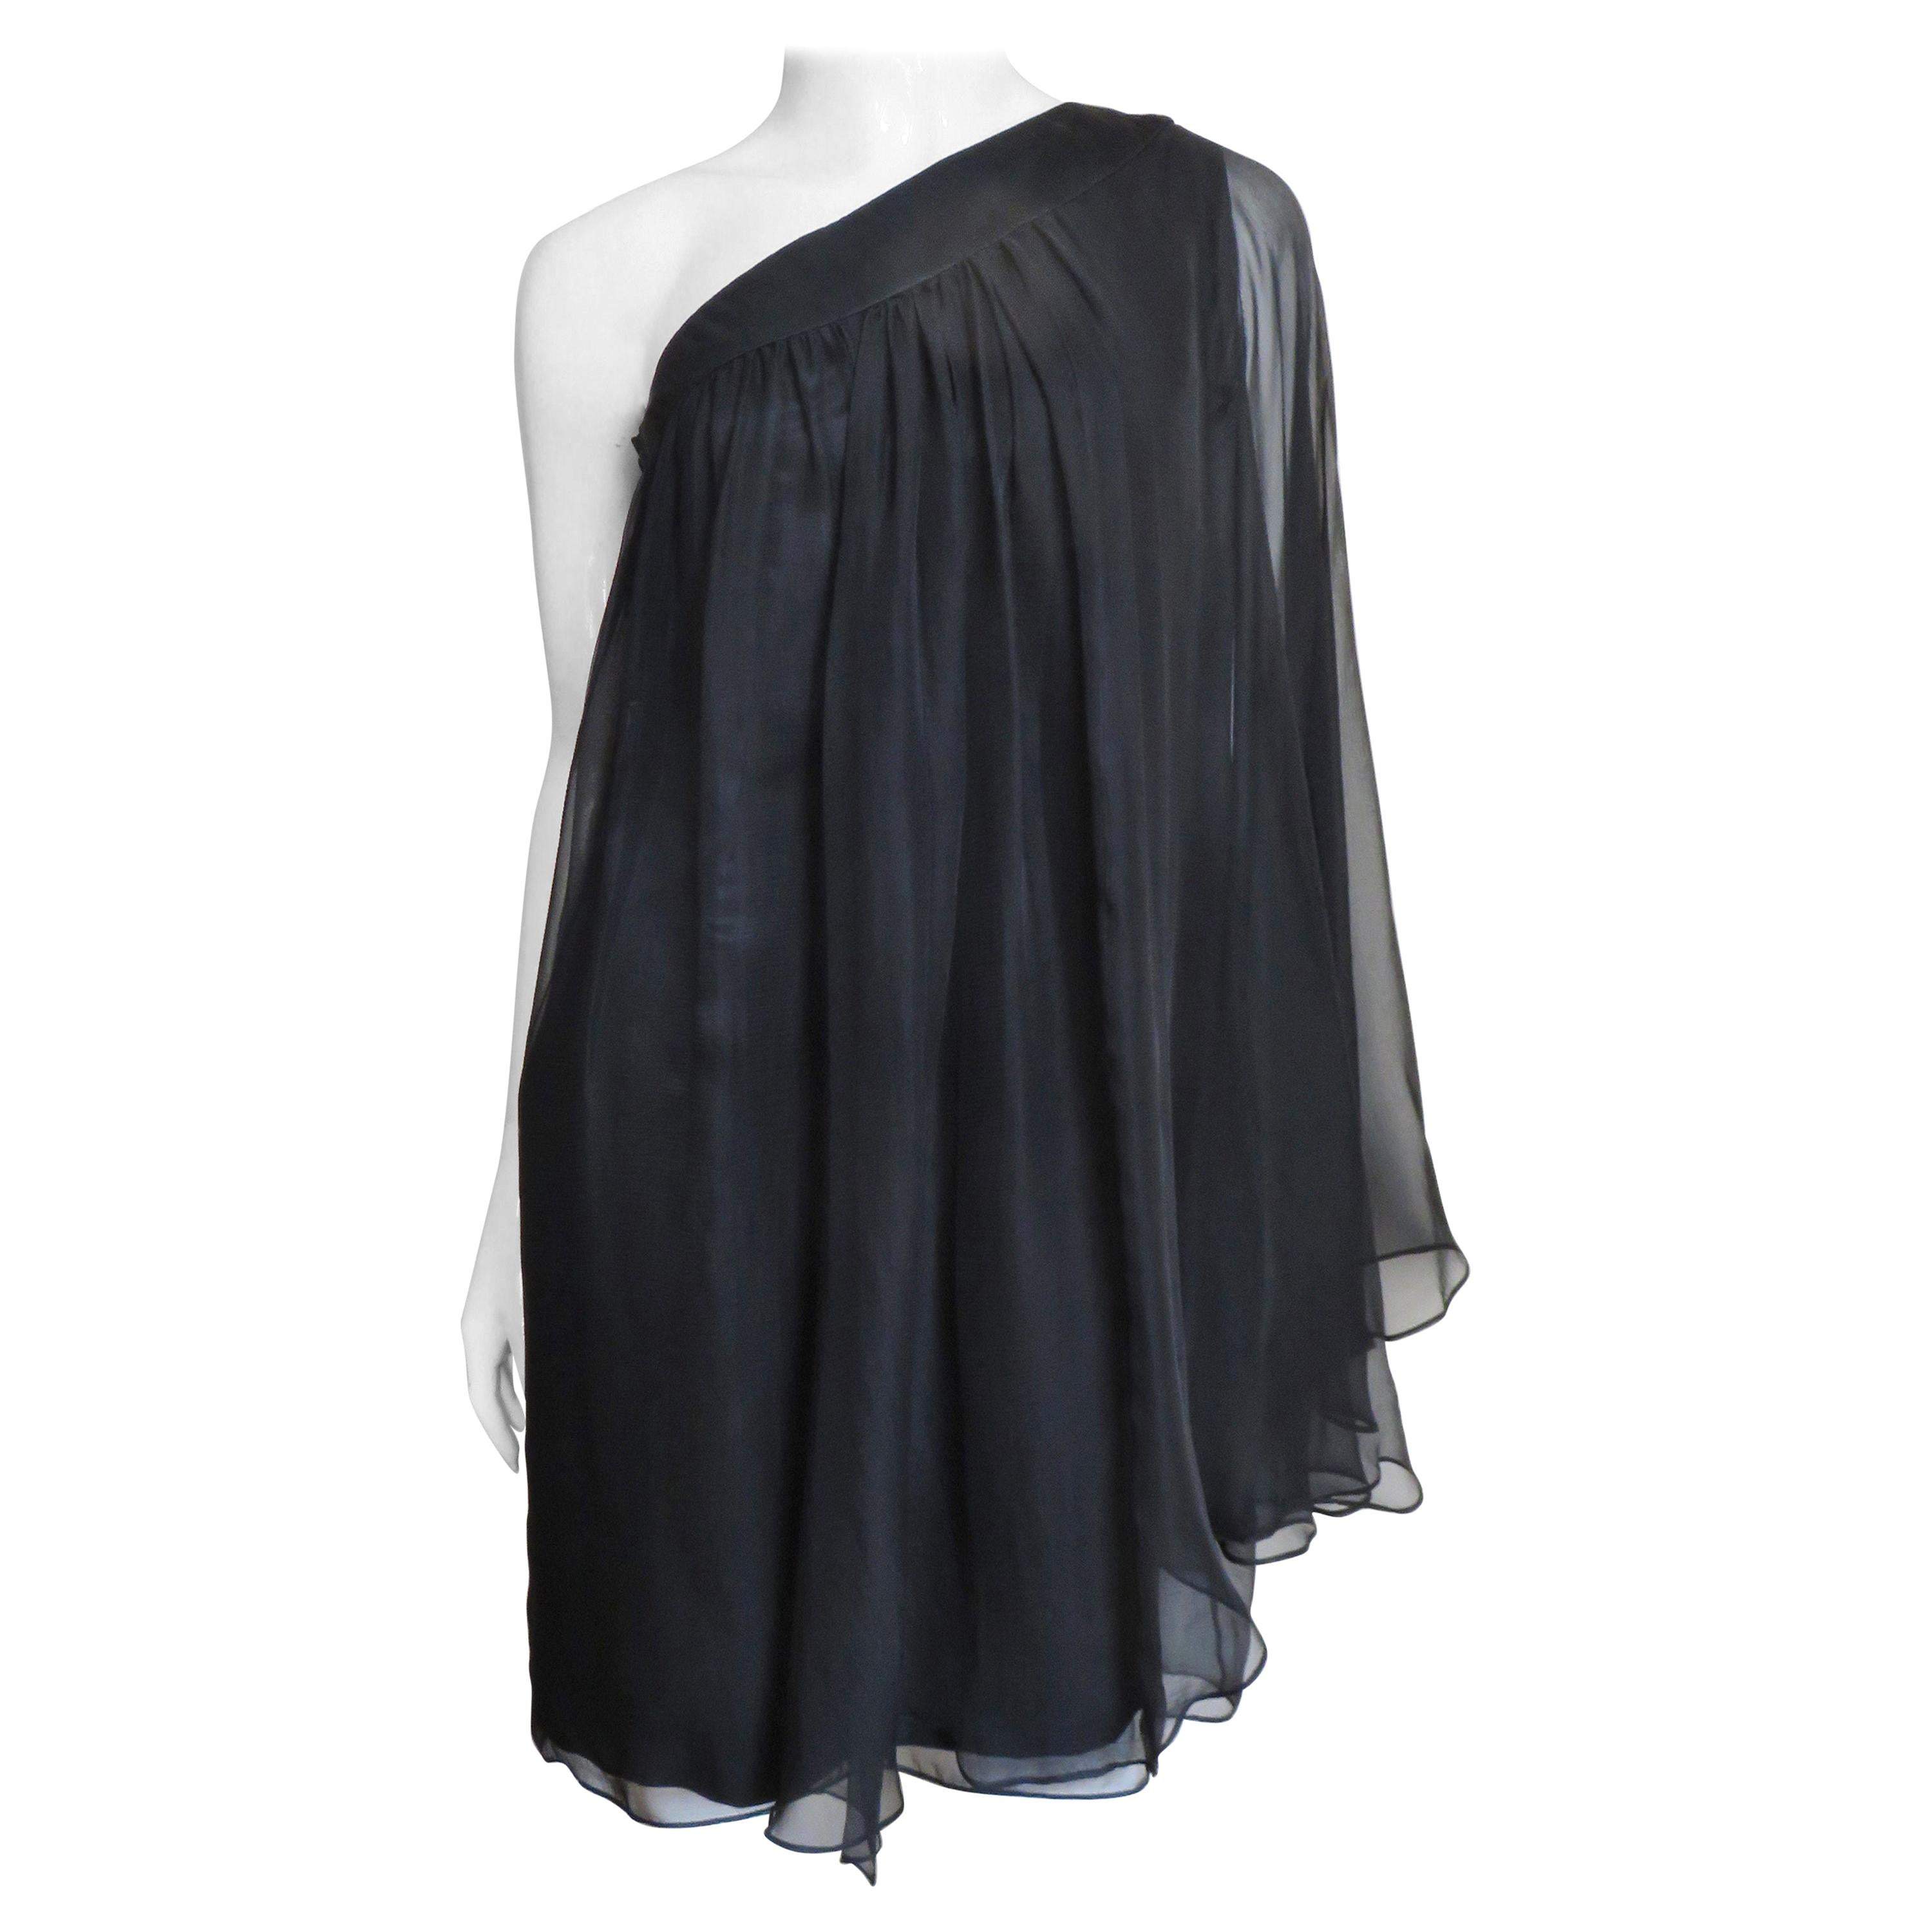 John Galliano for Christian Dior One Shoulder Silk Dress